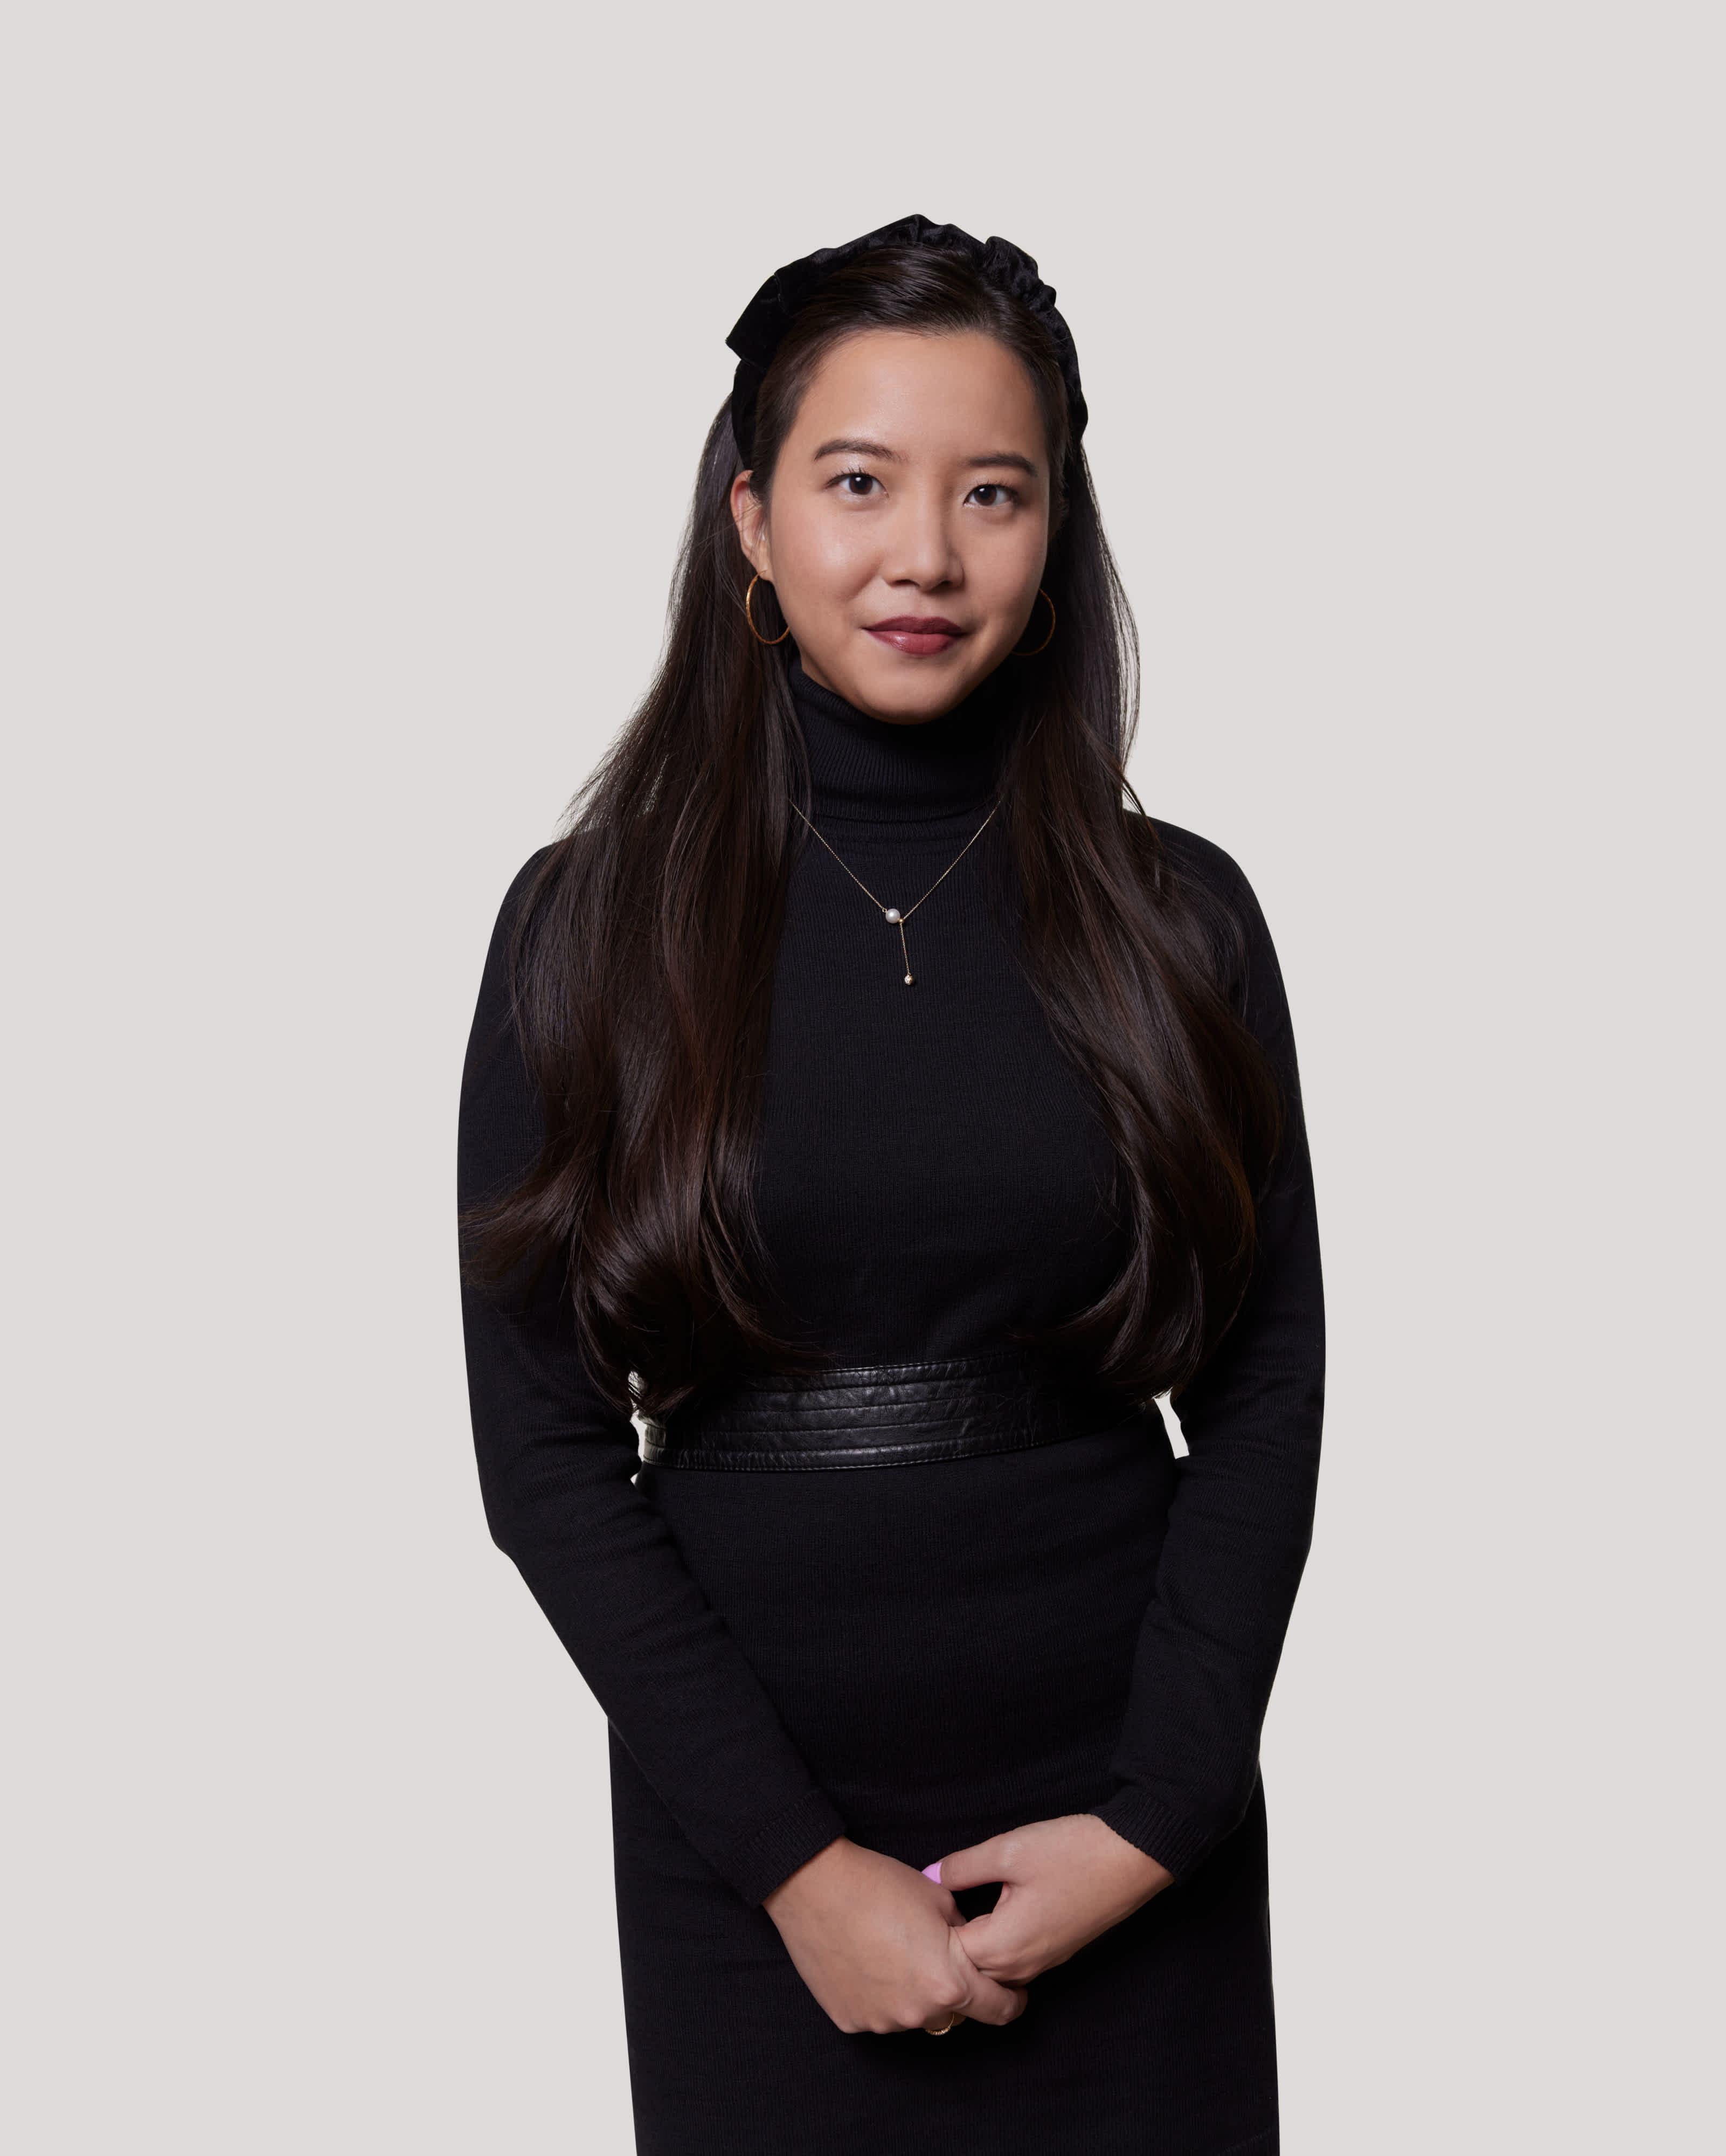 Professional Portrait of Rachel Teoh